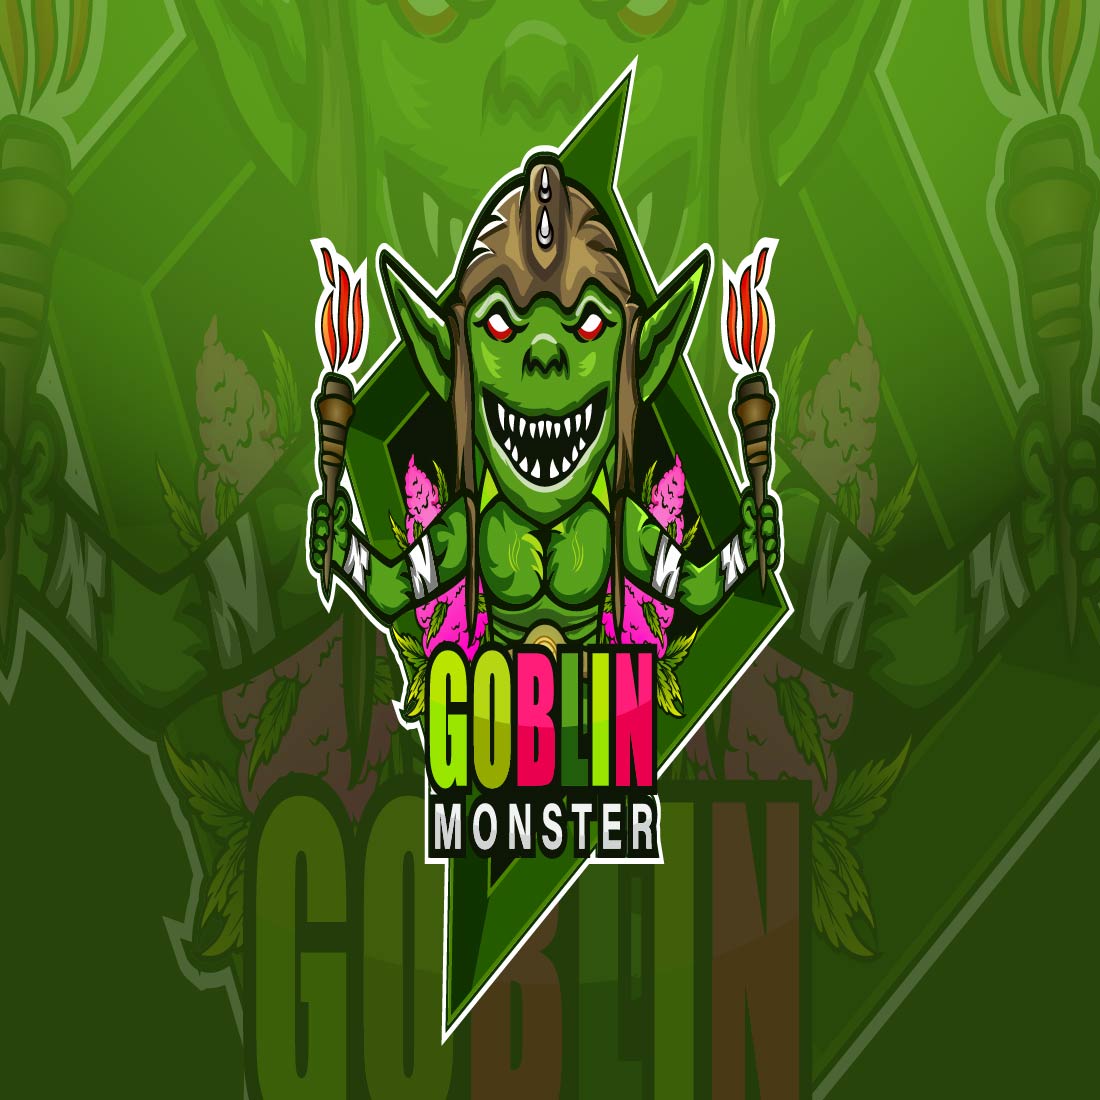 Goblin Monster cartoon mascot logo preview image.